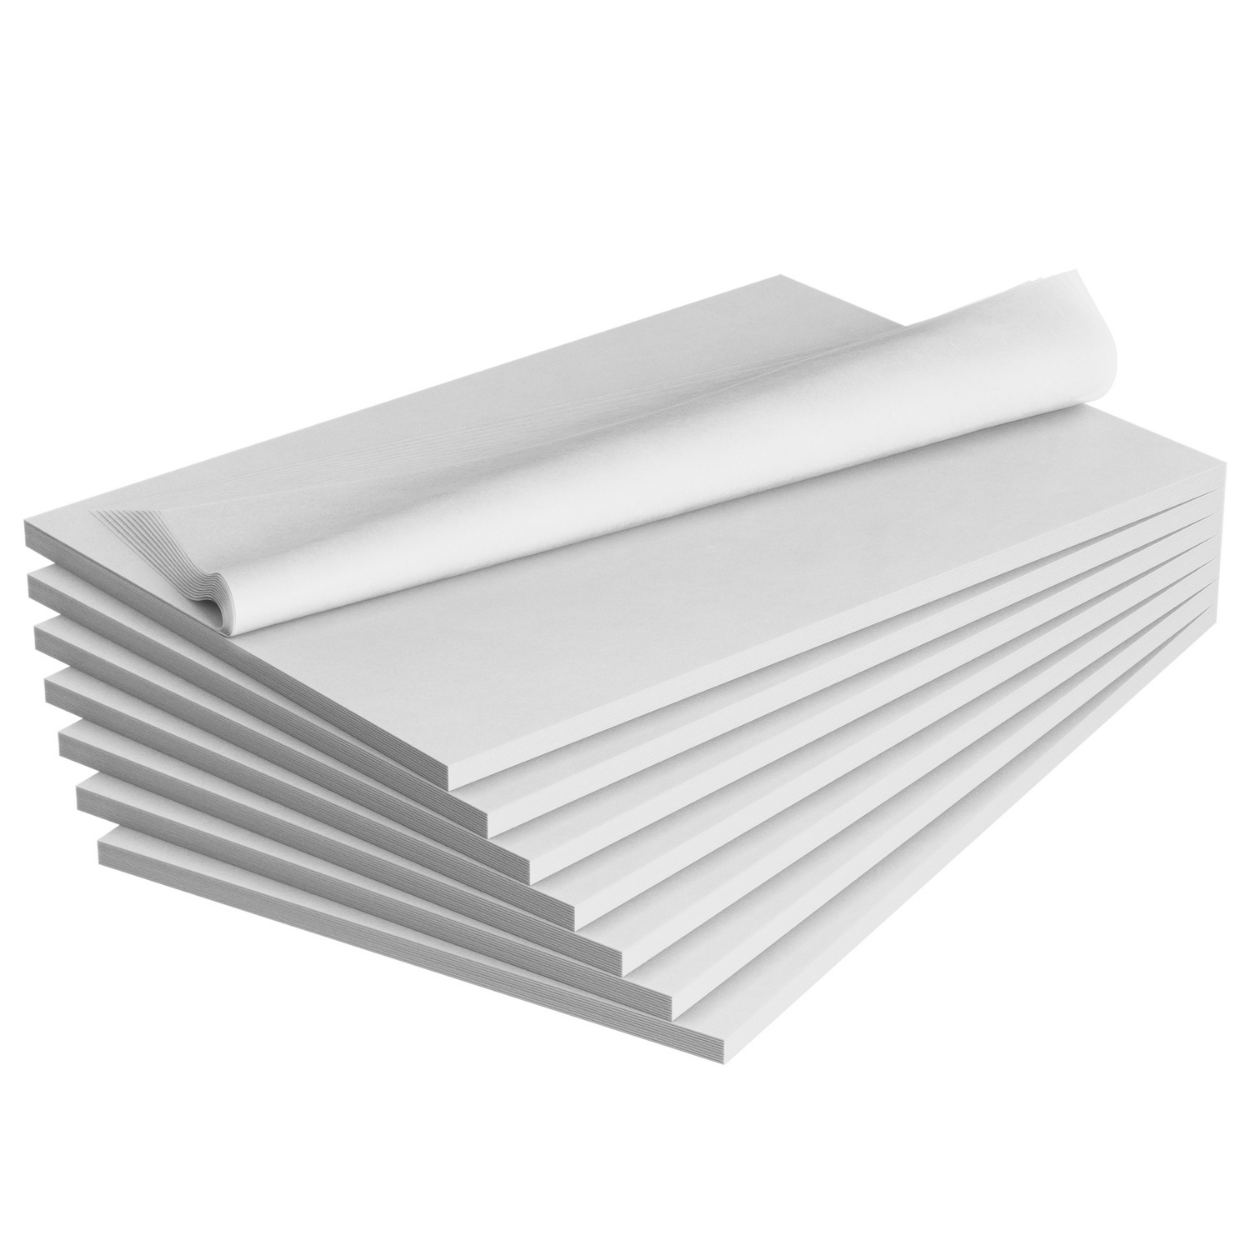 White Tissue Paper - 2 Packs of 480 Sheets Each